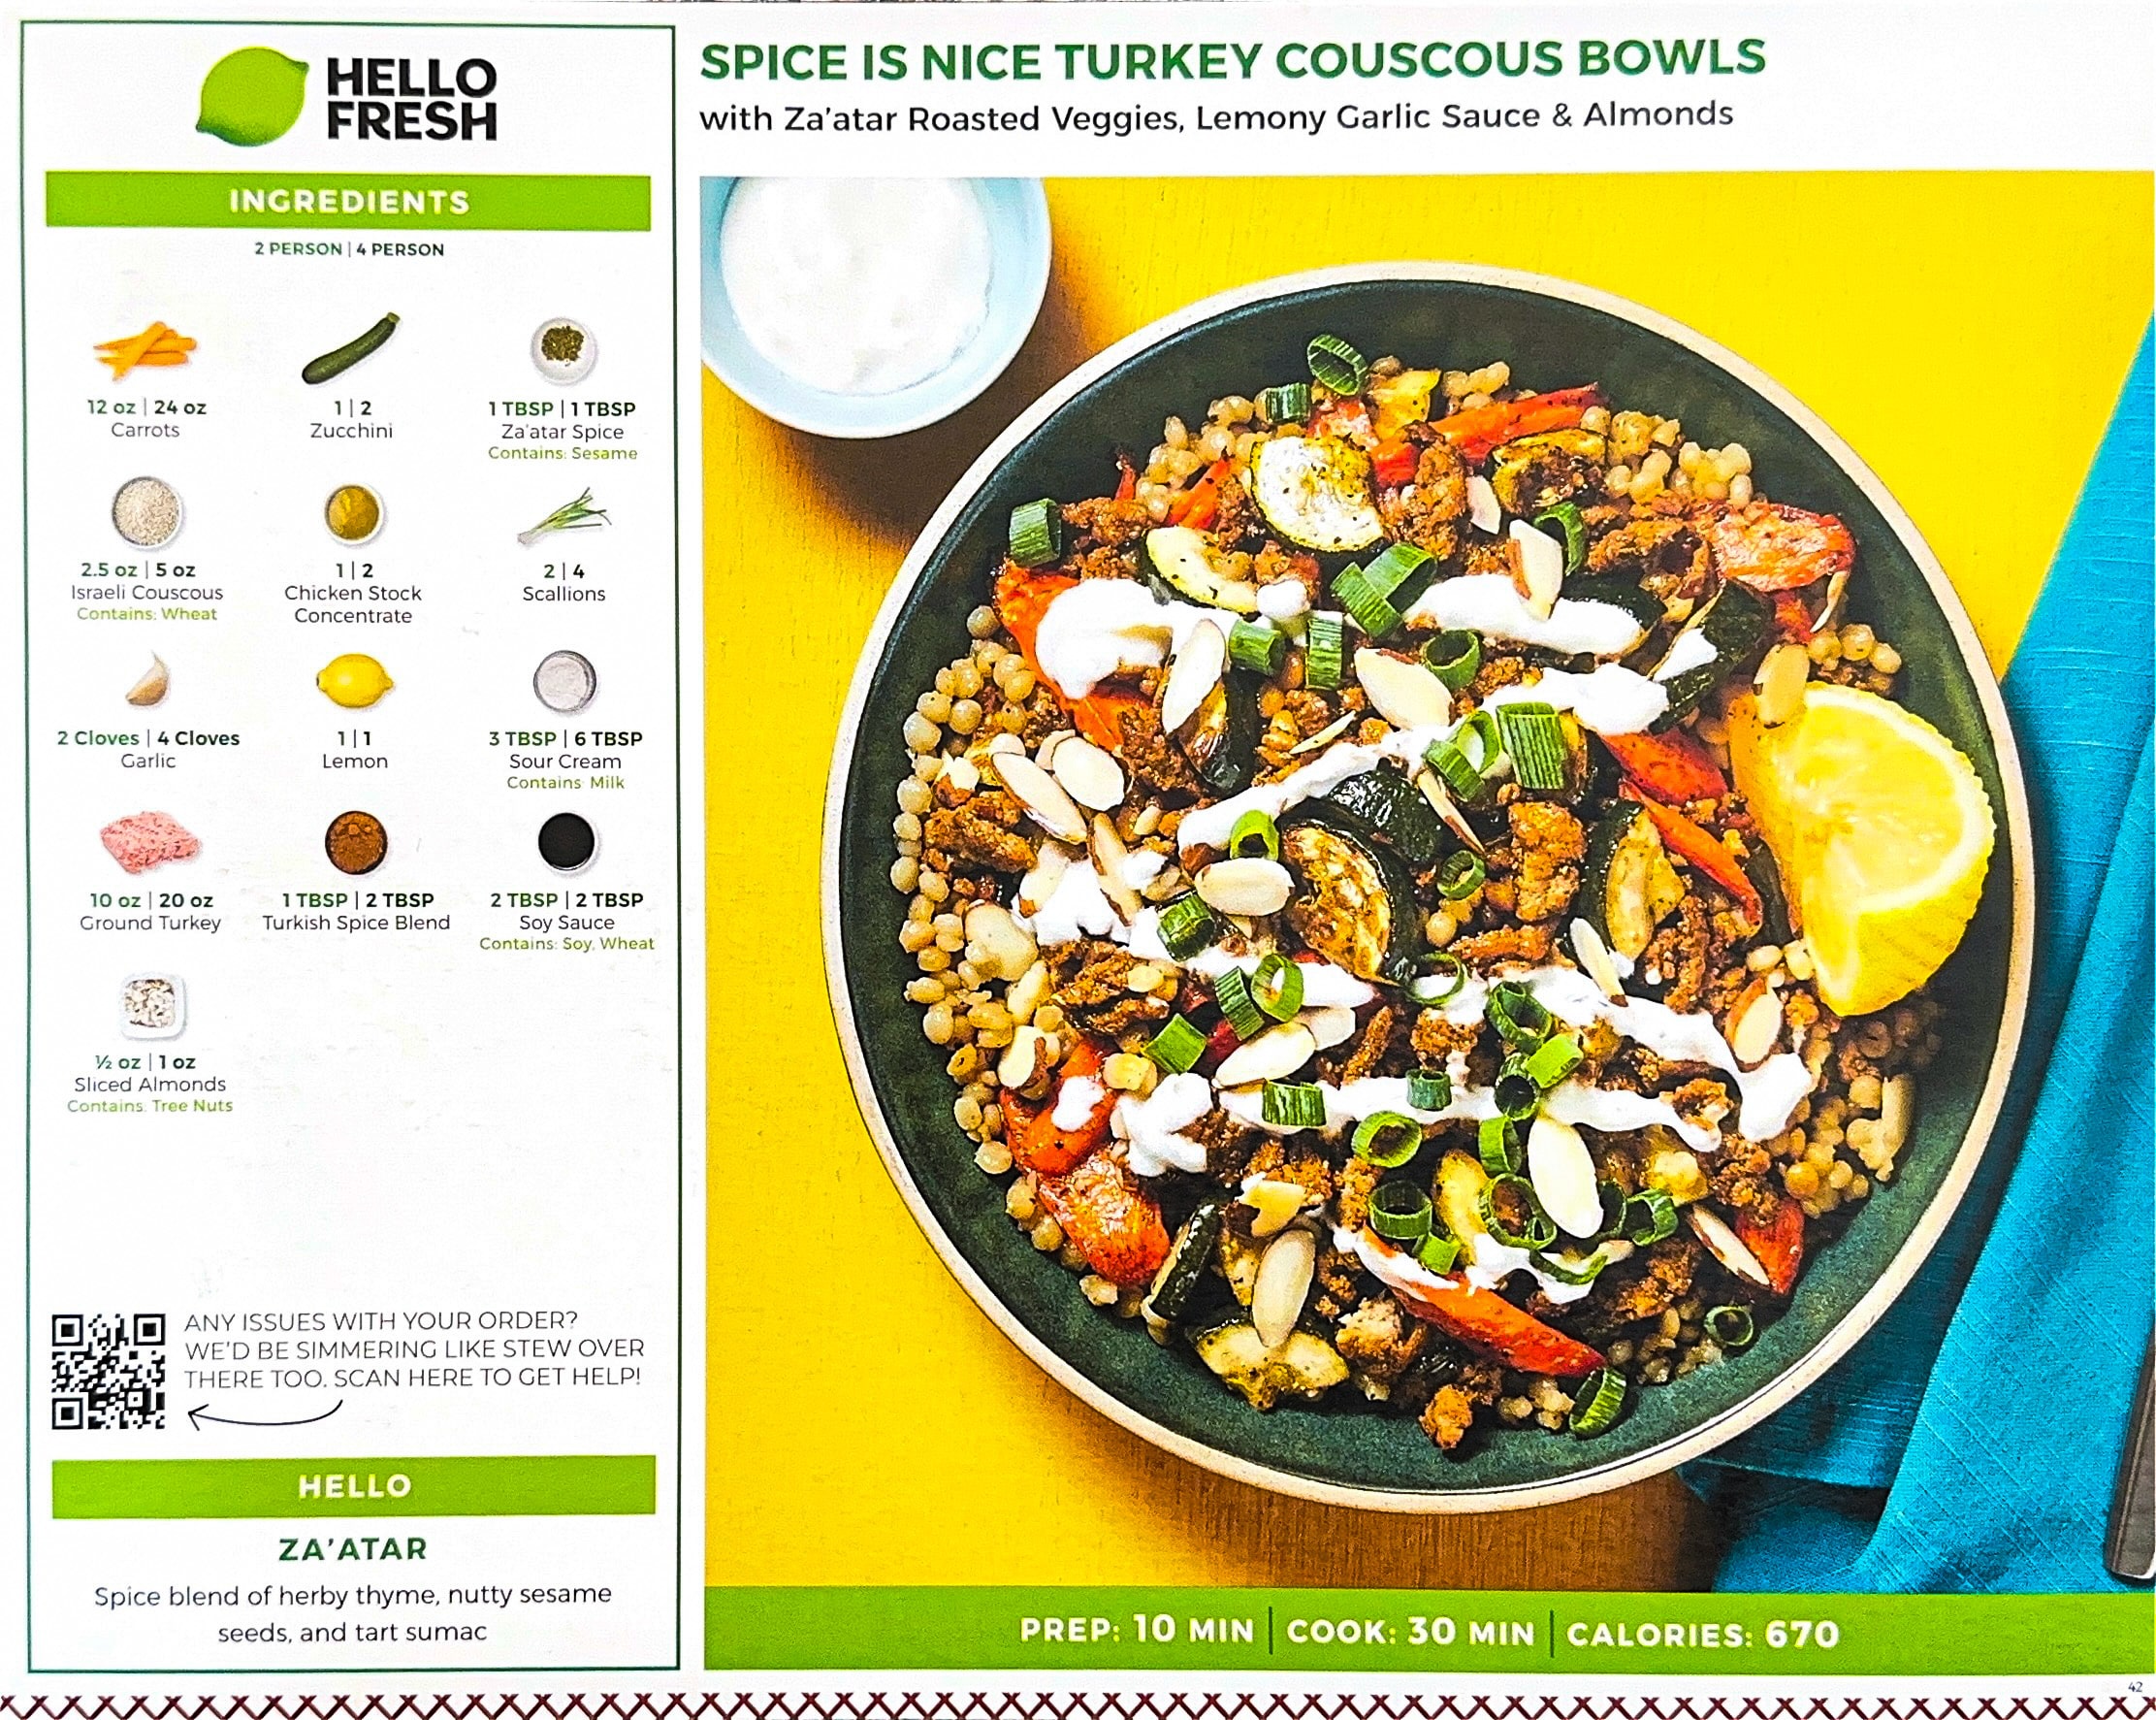 HelloFresh’s Spice is Nice Turkey Couscous Bowls with Za’atar Roasted Veggies, Lemony Garlic Sauce & Almonds